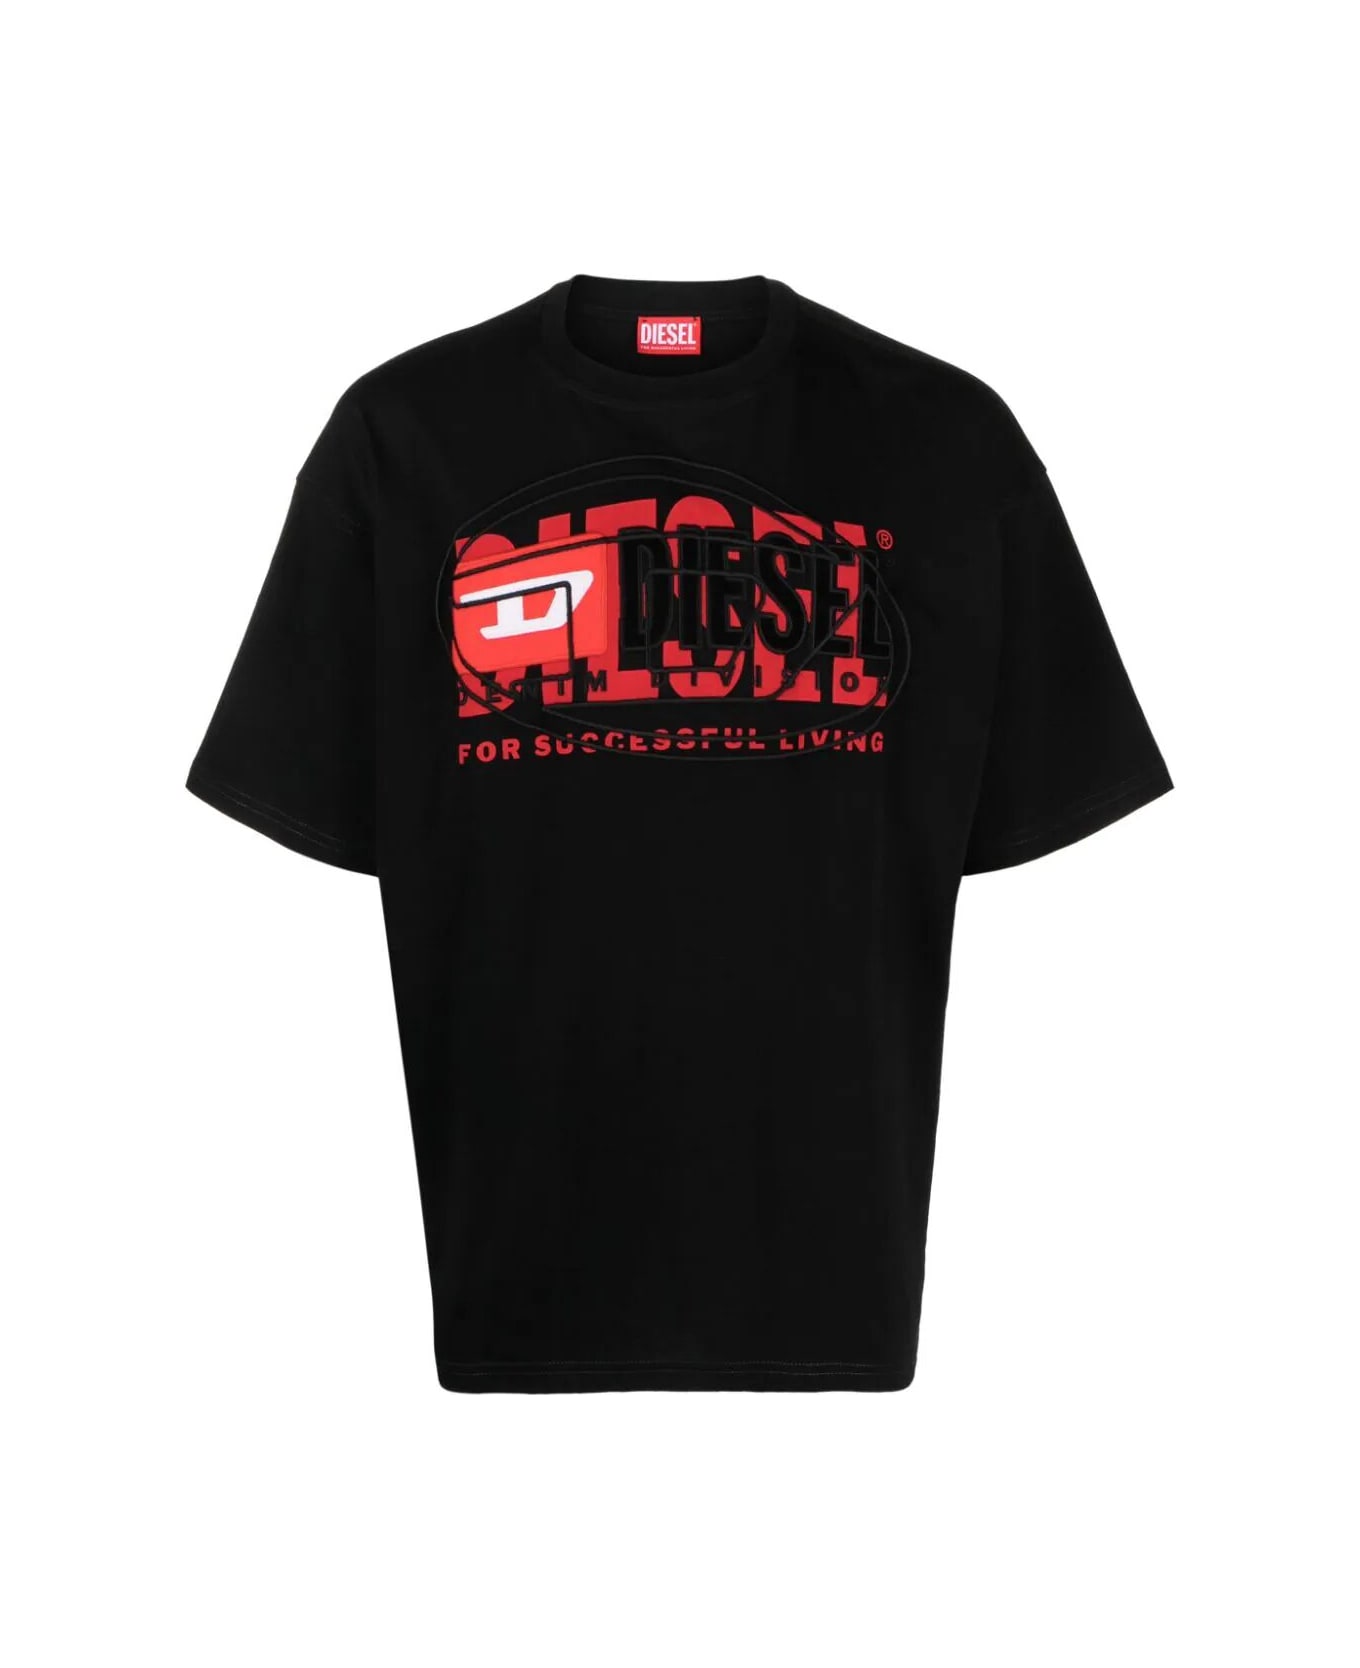 Diesel Boxt T-shirt - Xx Black シャツ